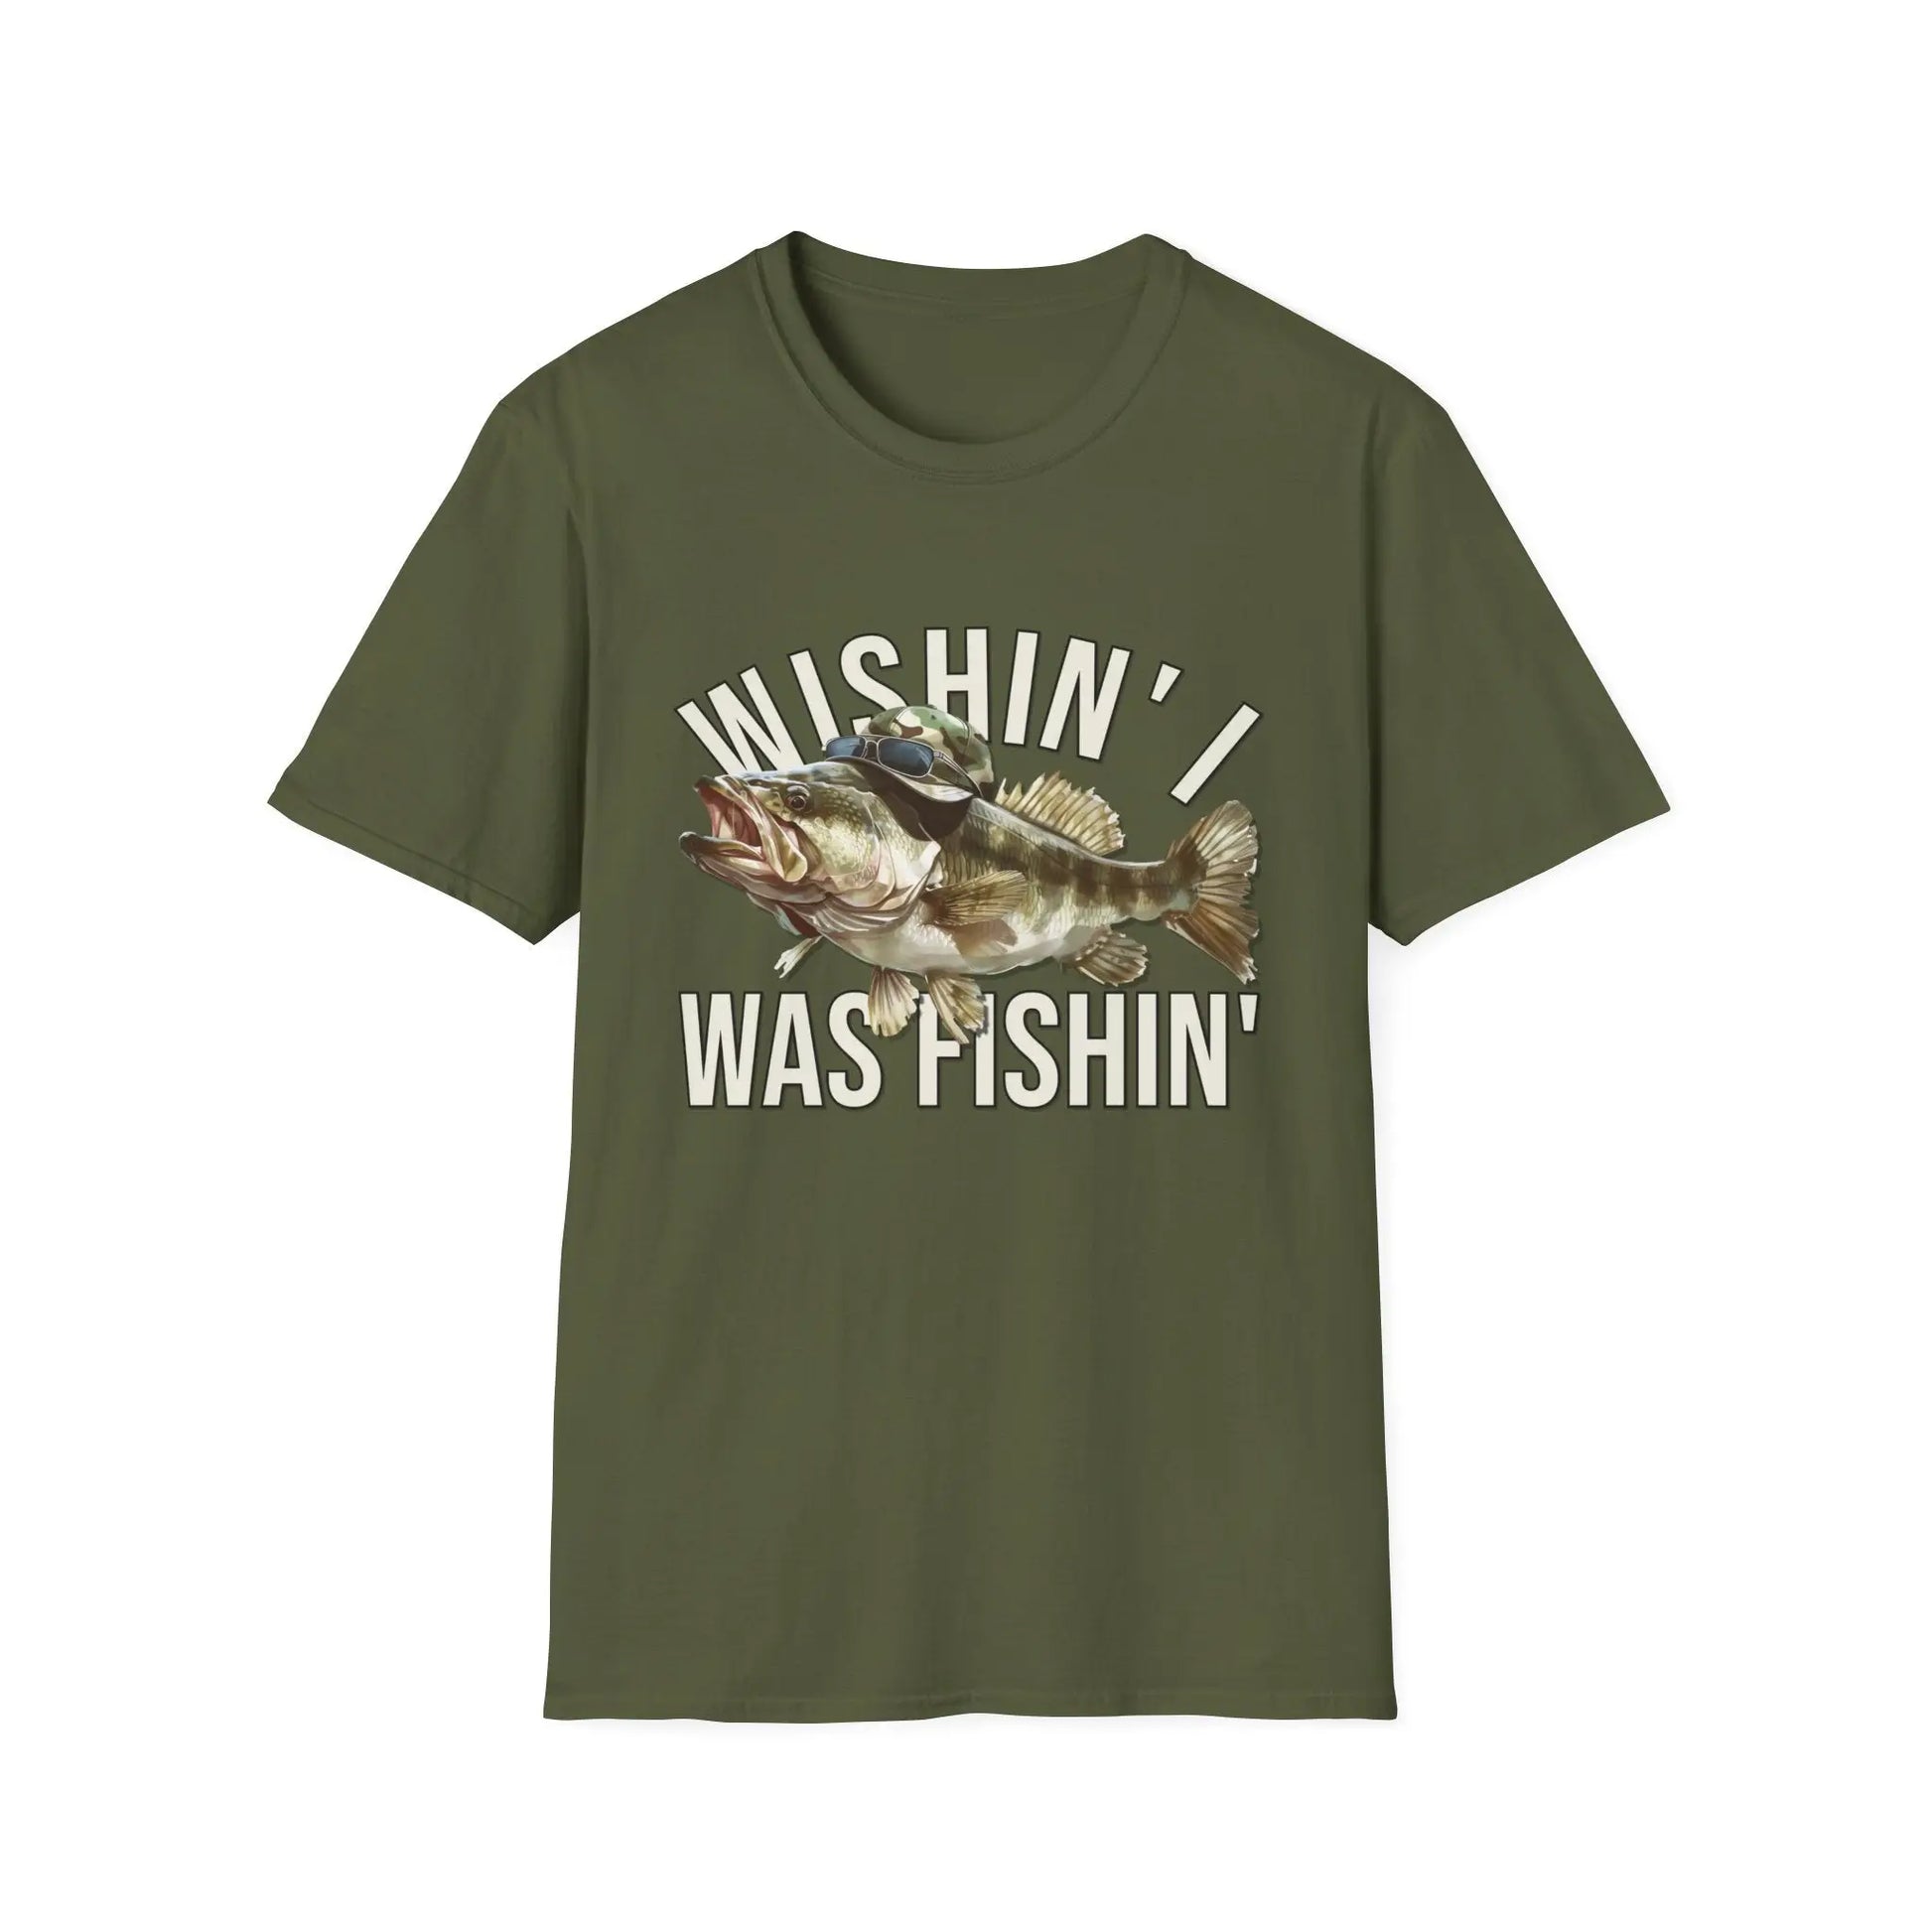 Wishin' I Was Fishin' Women's Softstyle T-Shirt - Wicked Tees